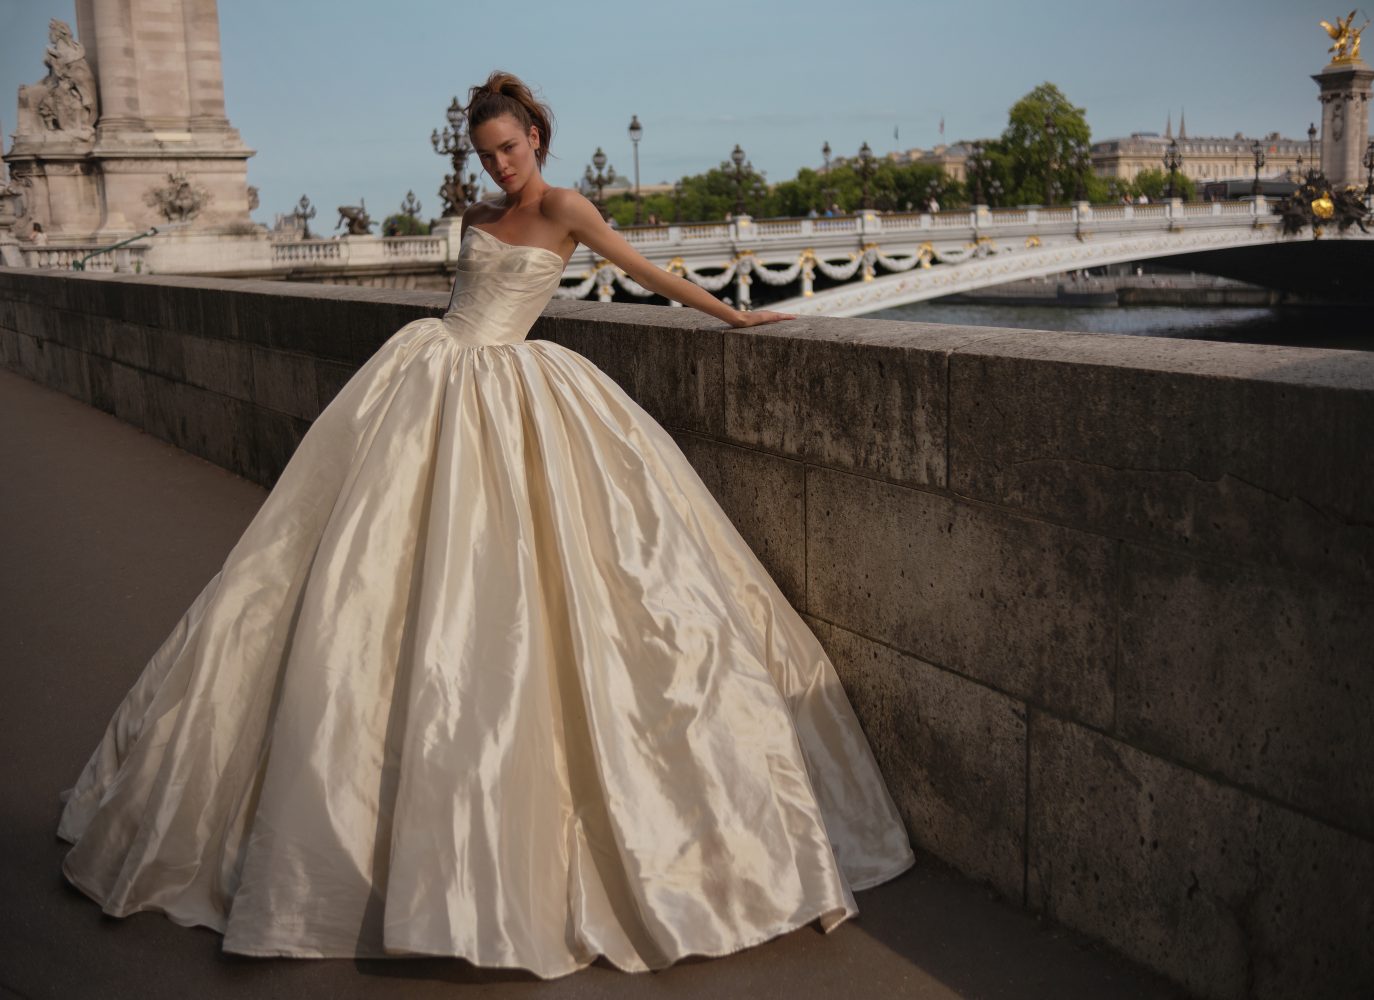 Princess bridal dress designer wedding gown